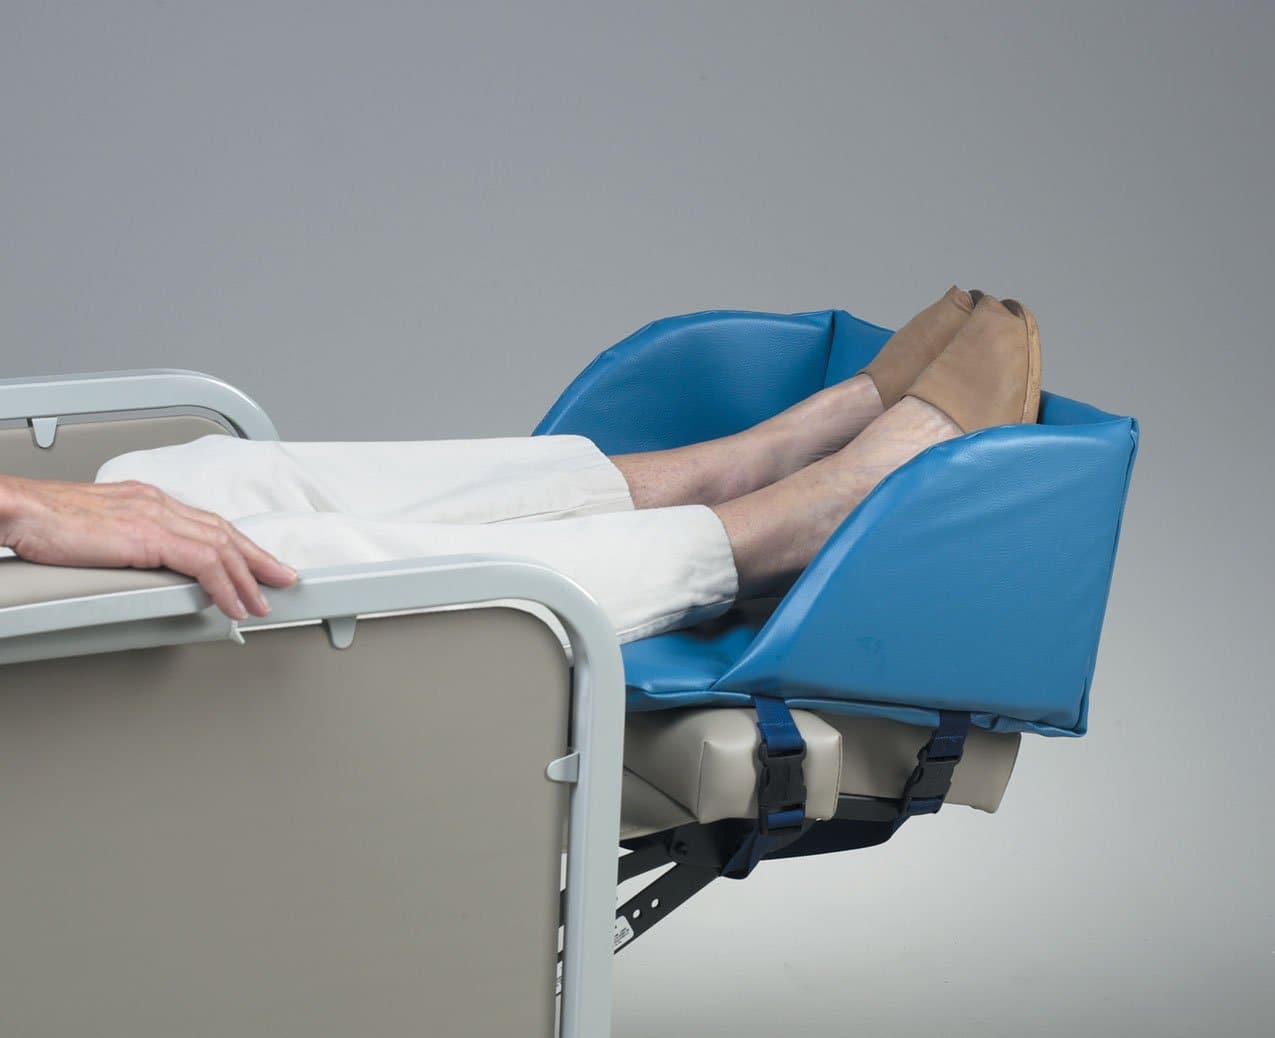 Skil-Care Geri-Chair Foot Cradle - Foam Padded For Comfort - Senior.com Foot Positioners